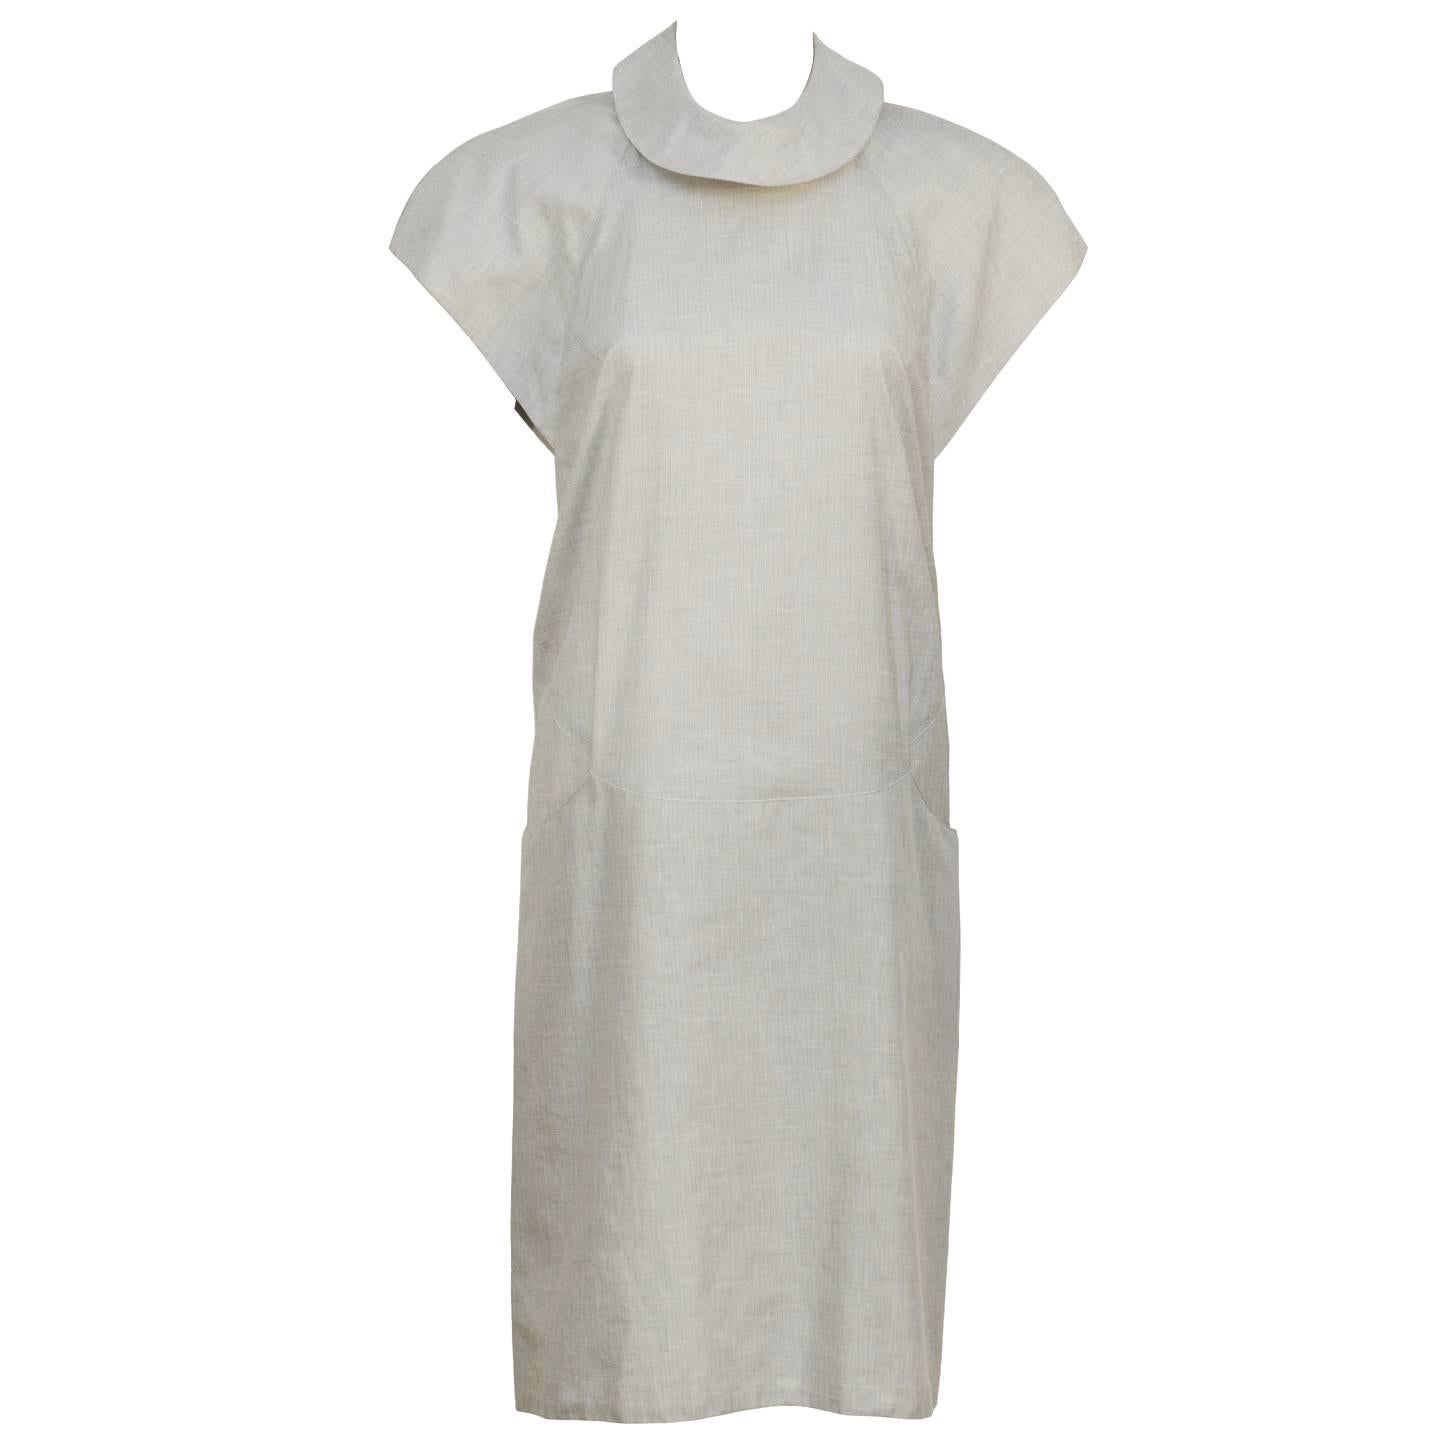 1980's Catherine Hipp Light Grey Day Dress